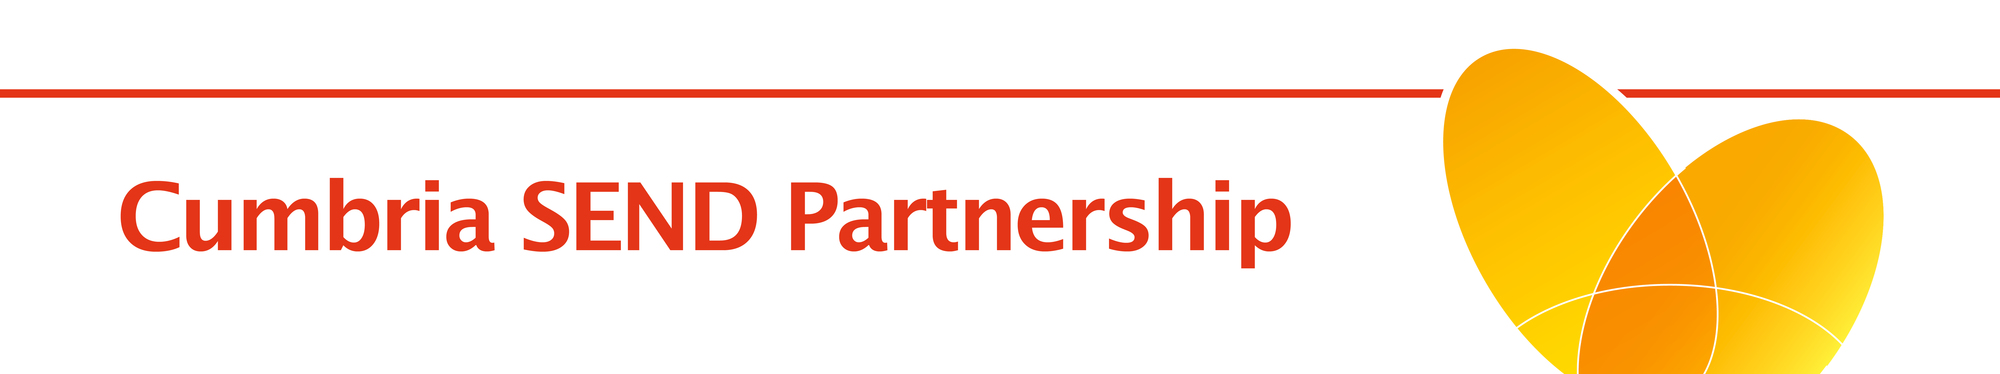 SEND Partnership banner